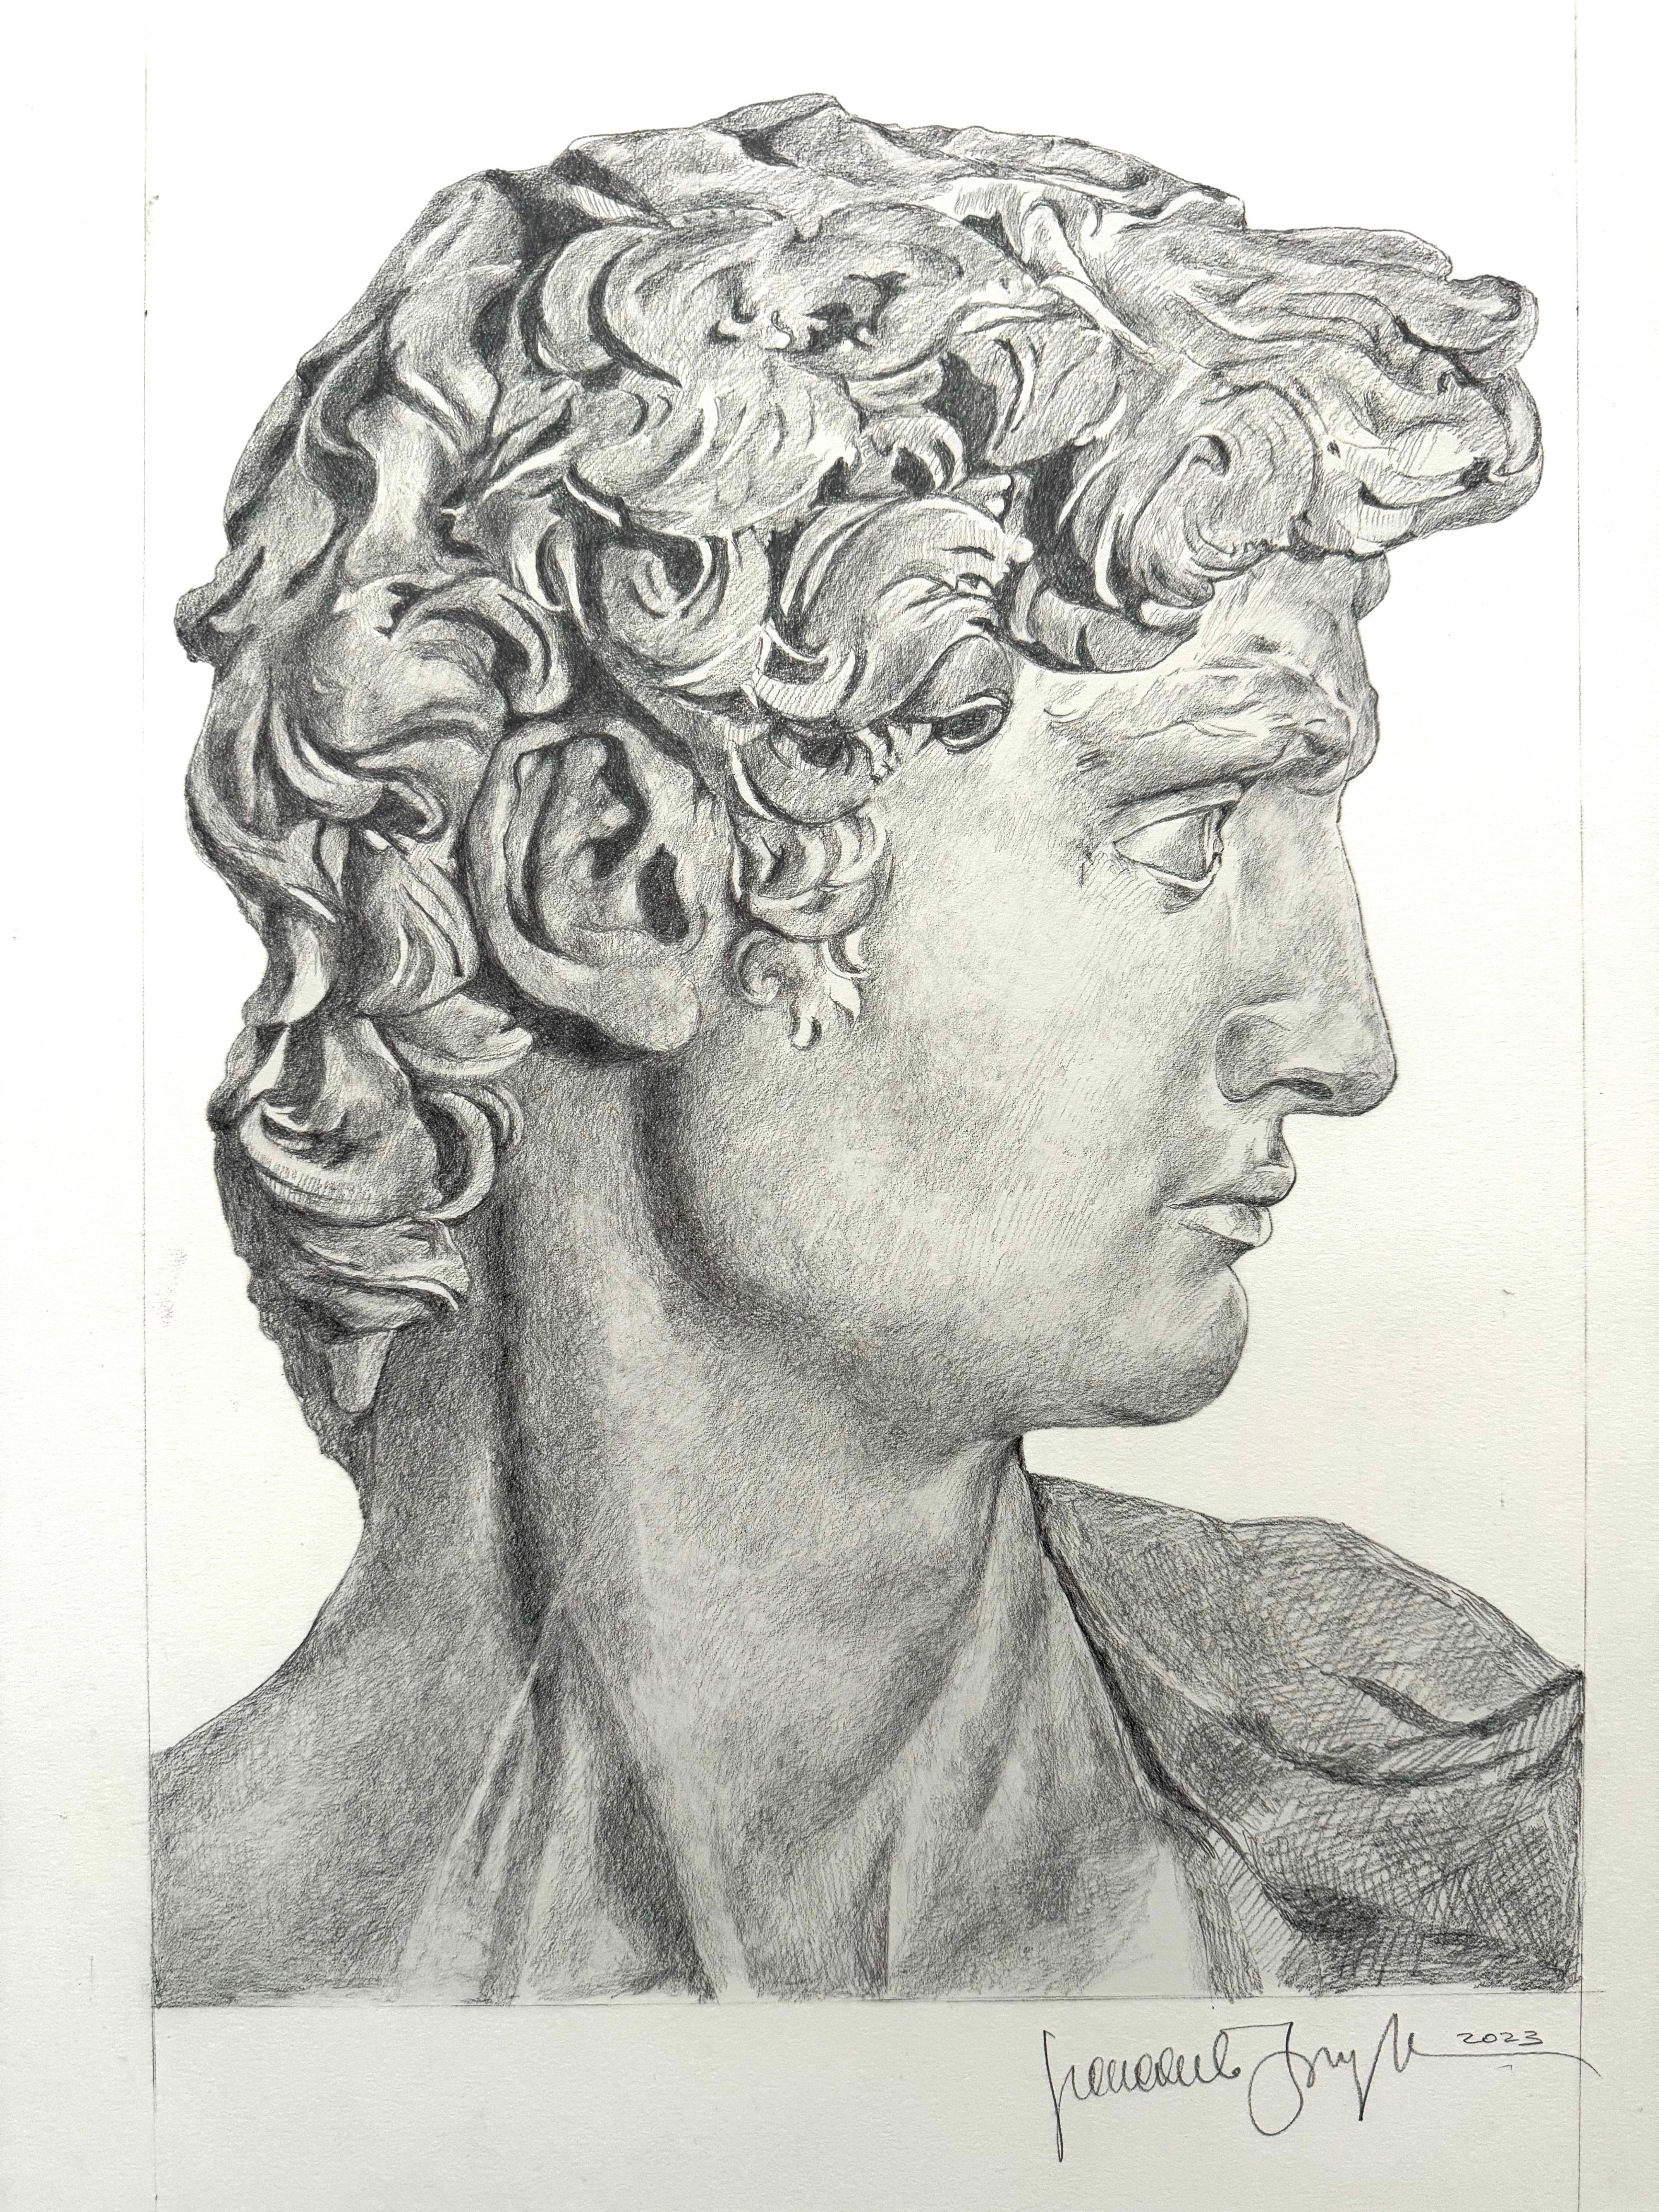 Giancarlo Impiglia Nude – Unglaubliche Skizze von Michelangelos David